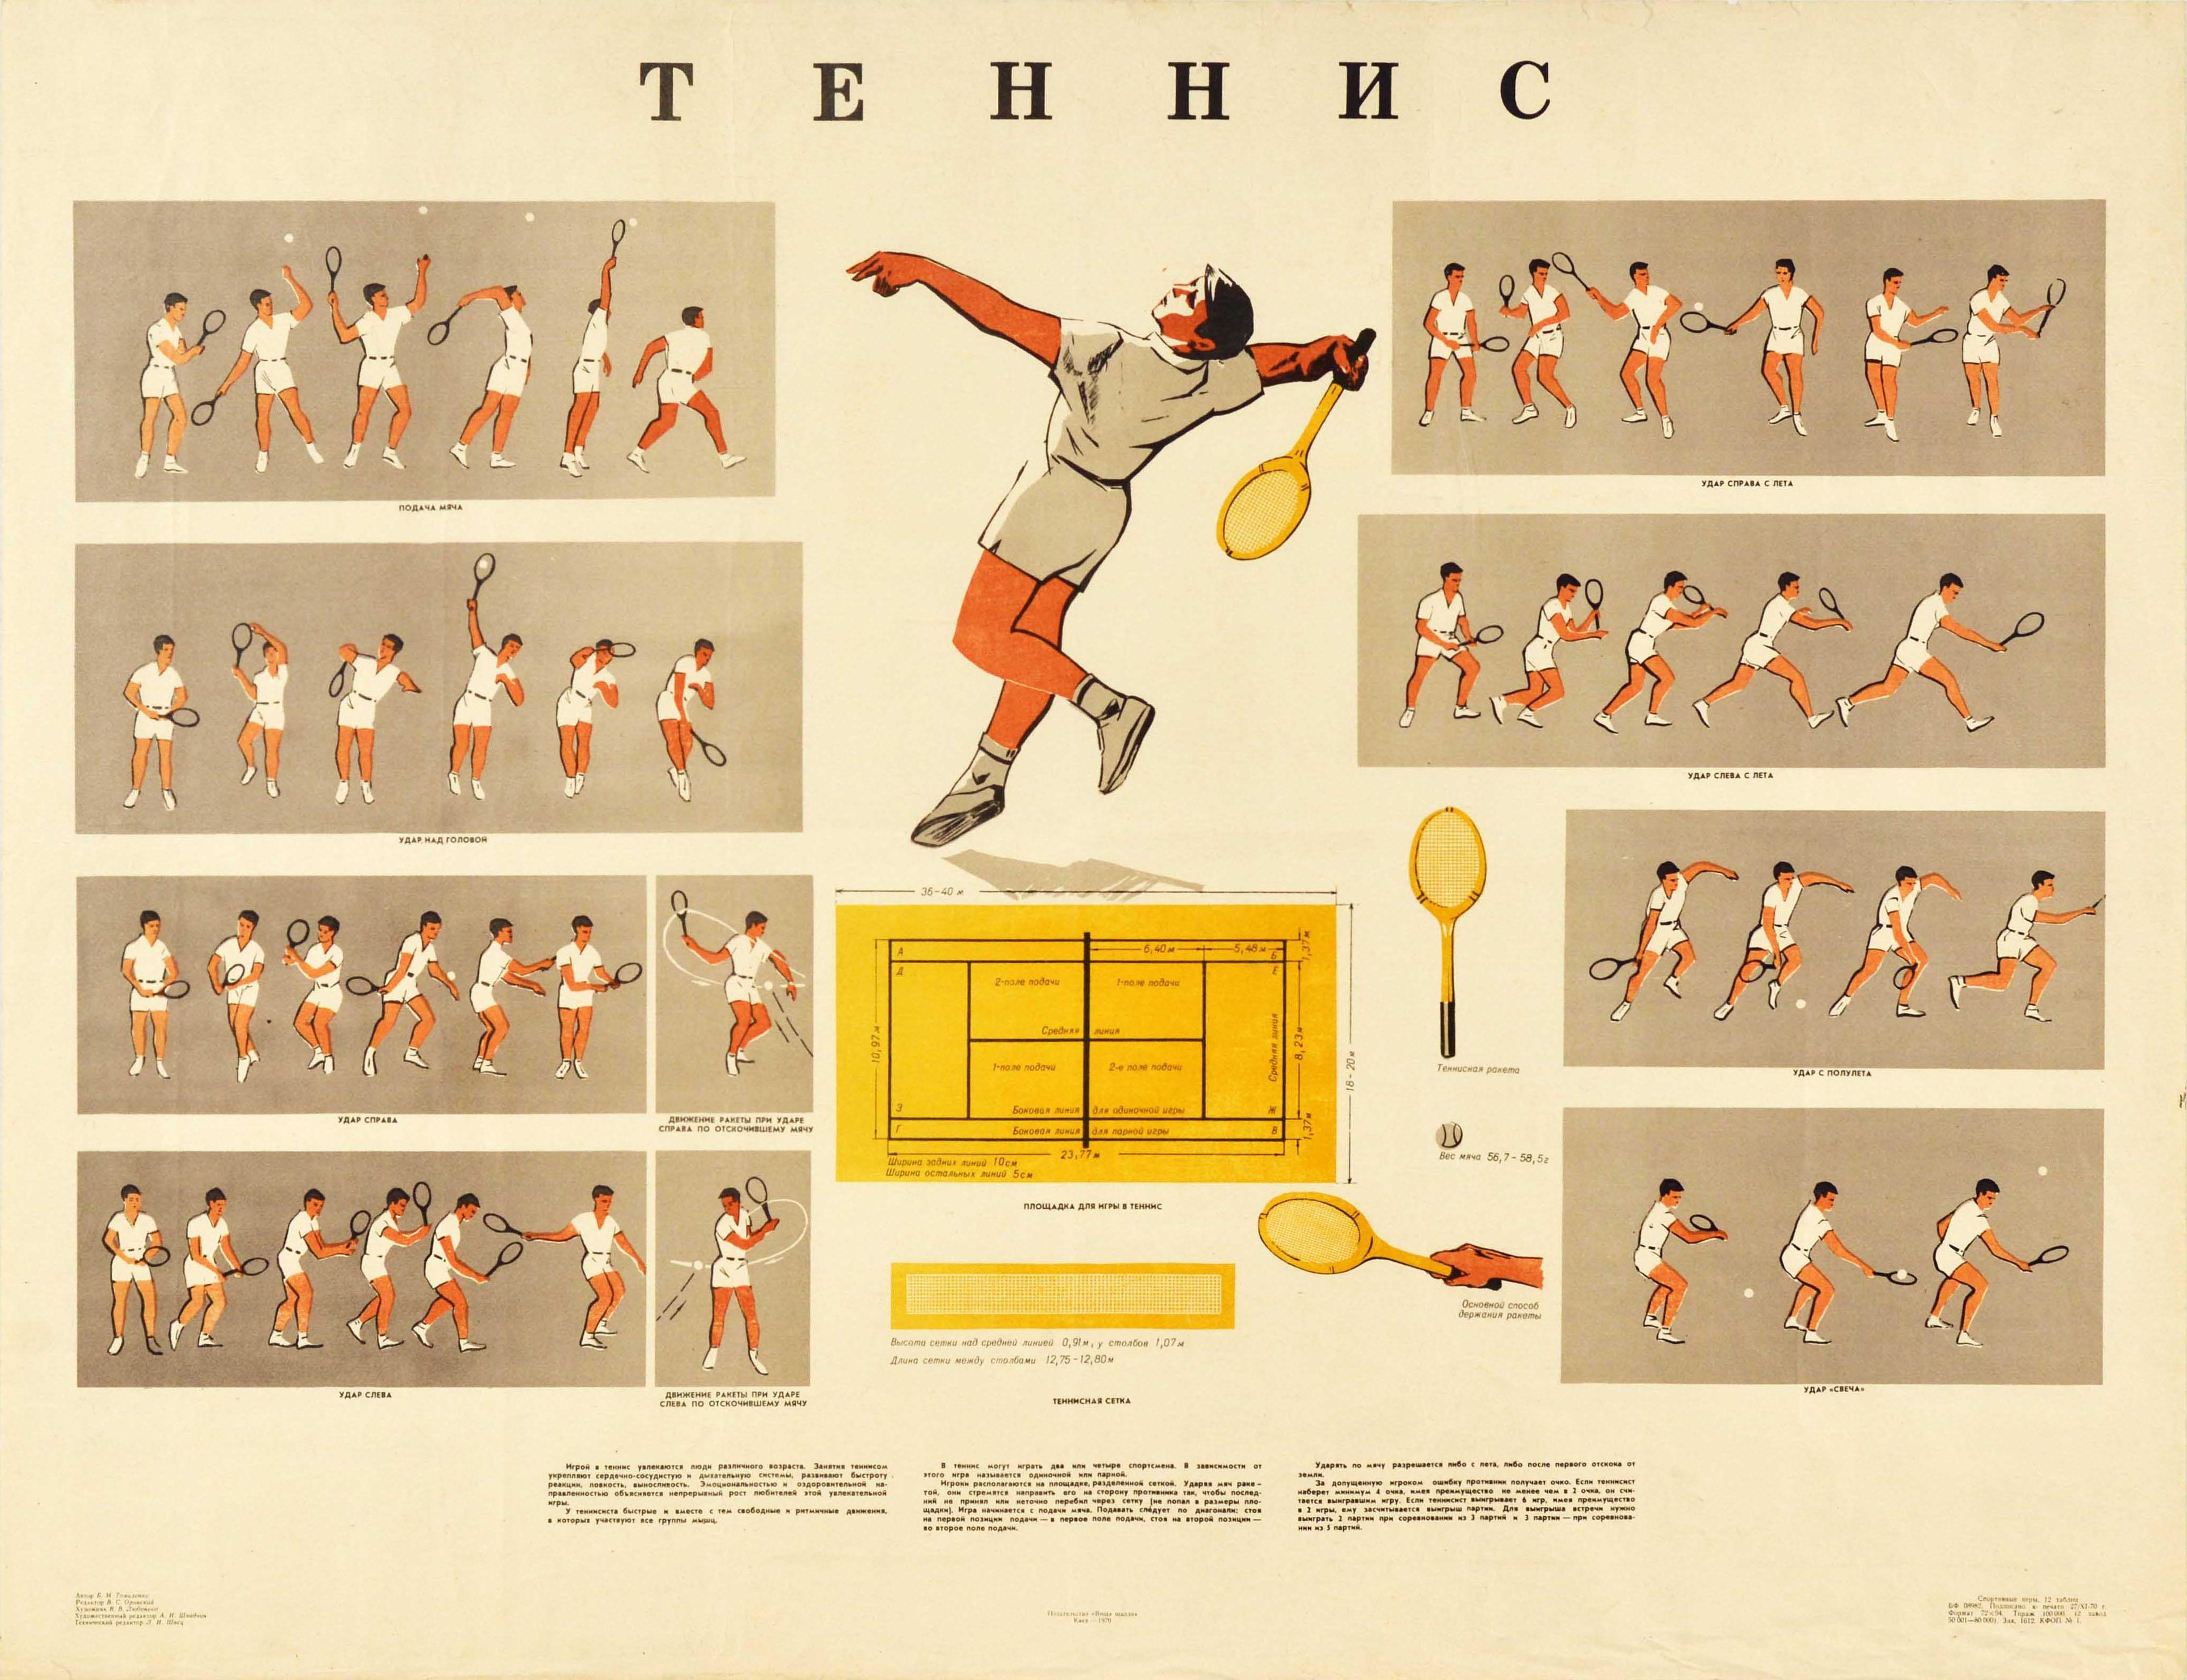 Lyubonko Print - Original Vintage Poster How To Play Tennis Match Equipment Illustrated Sport Art